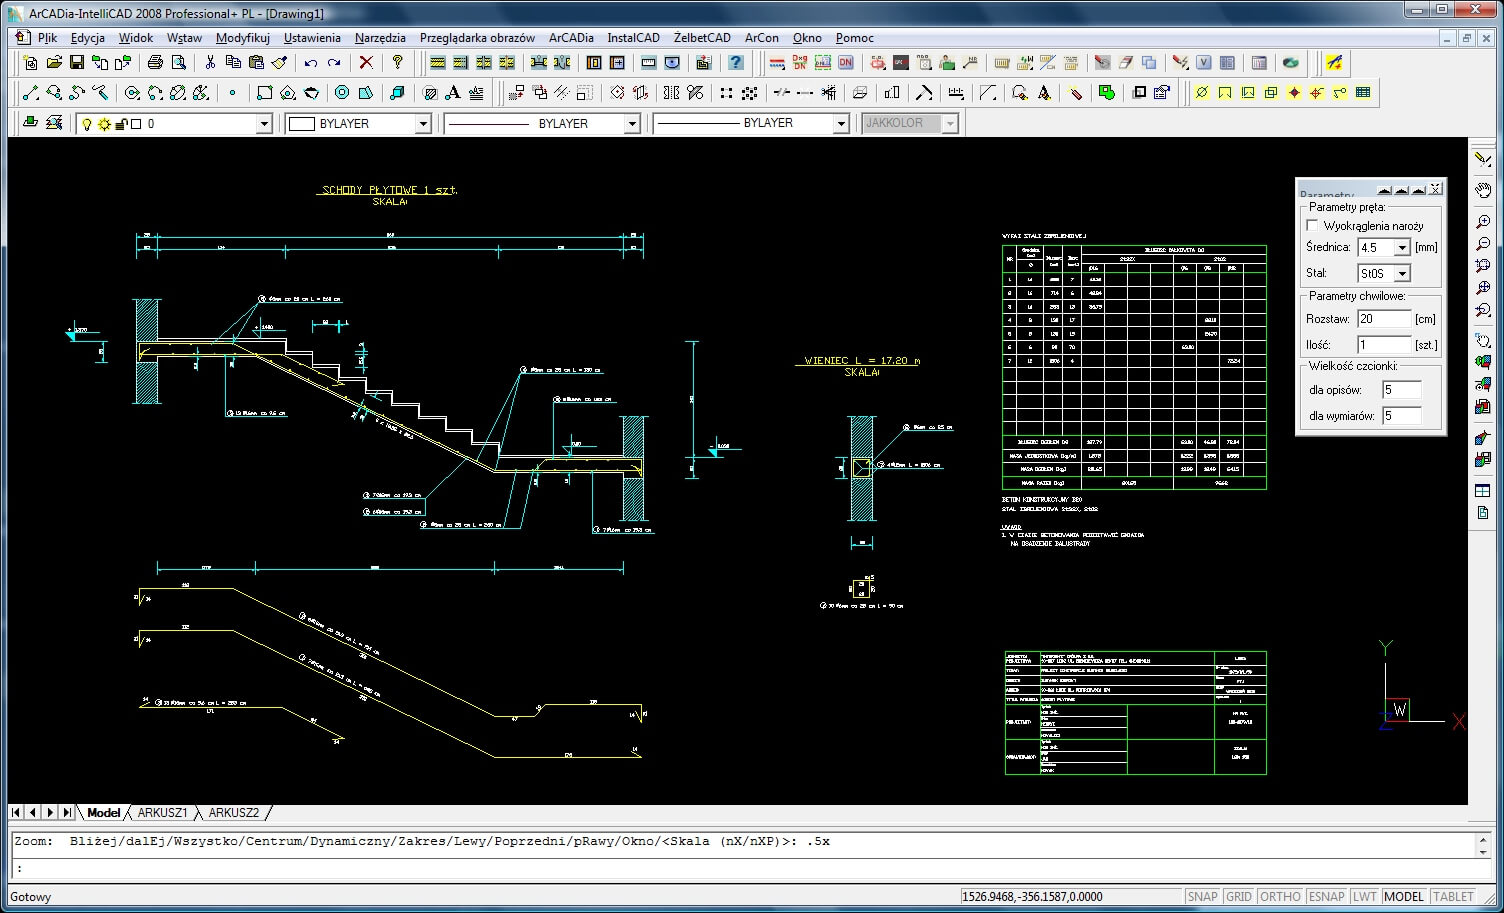 Konstruktor – Schody pytowe | INTERsoft program CAD